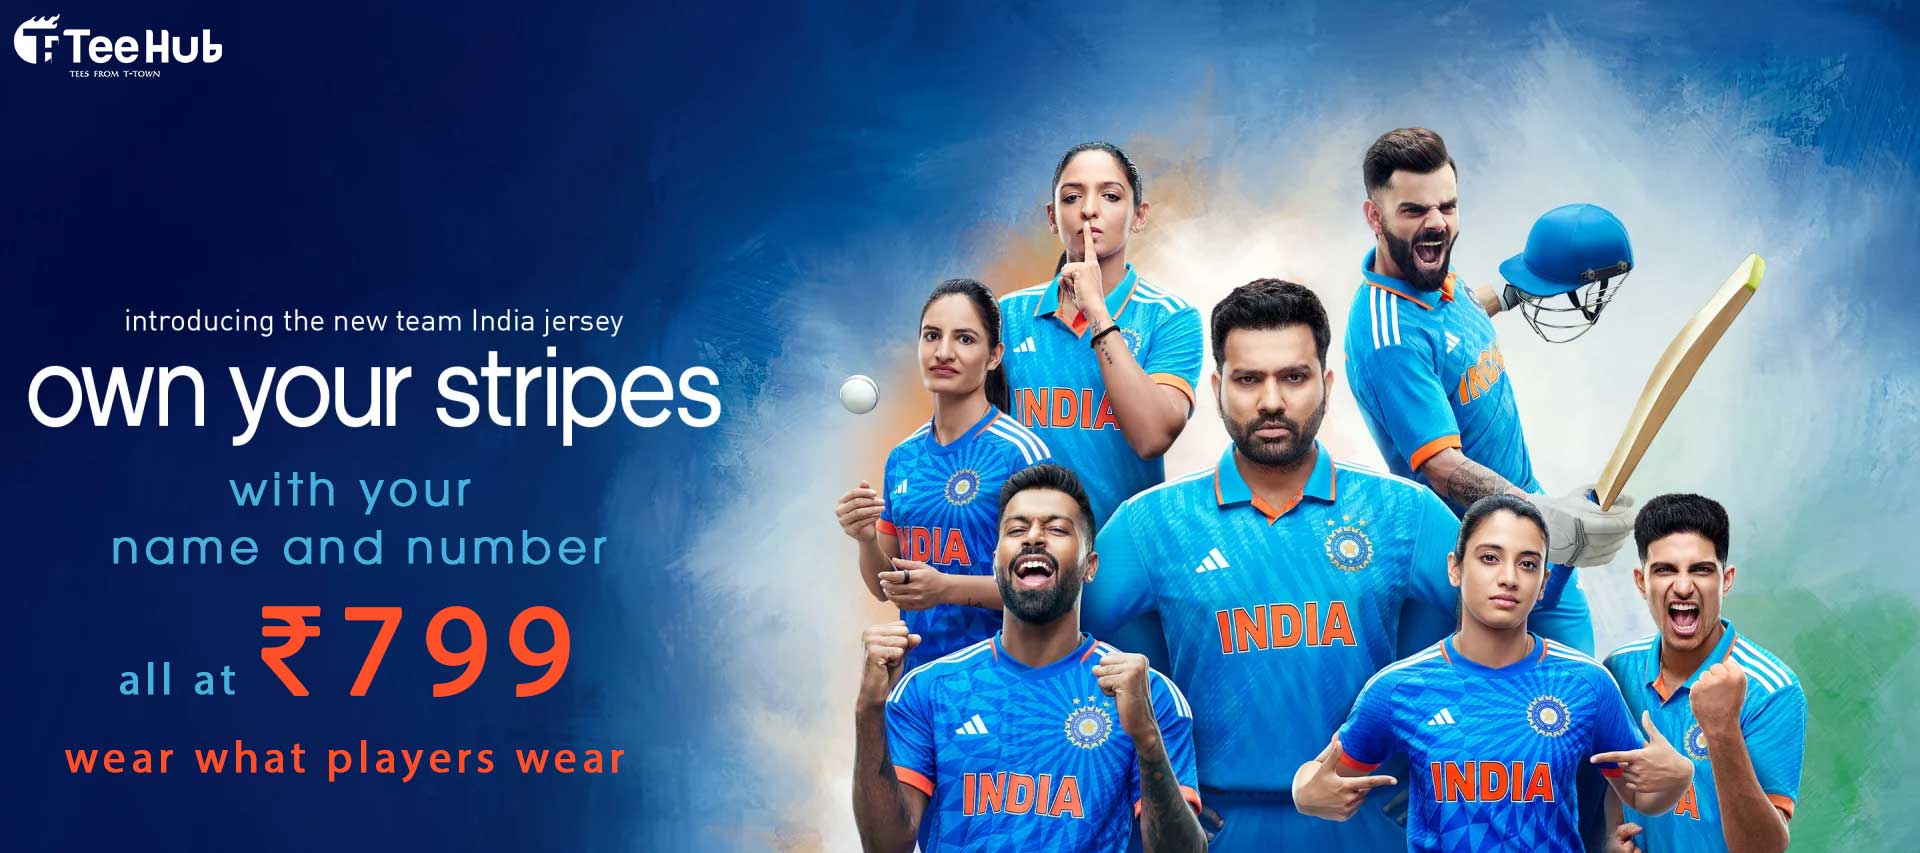 India Cricket ODI Player Jersey